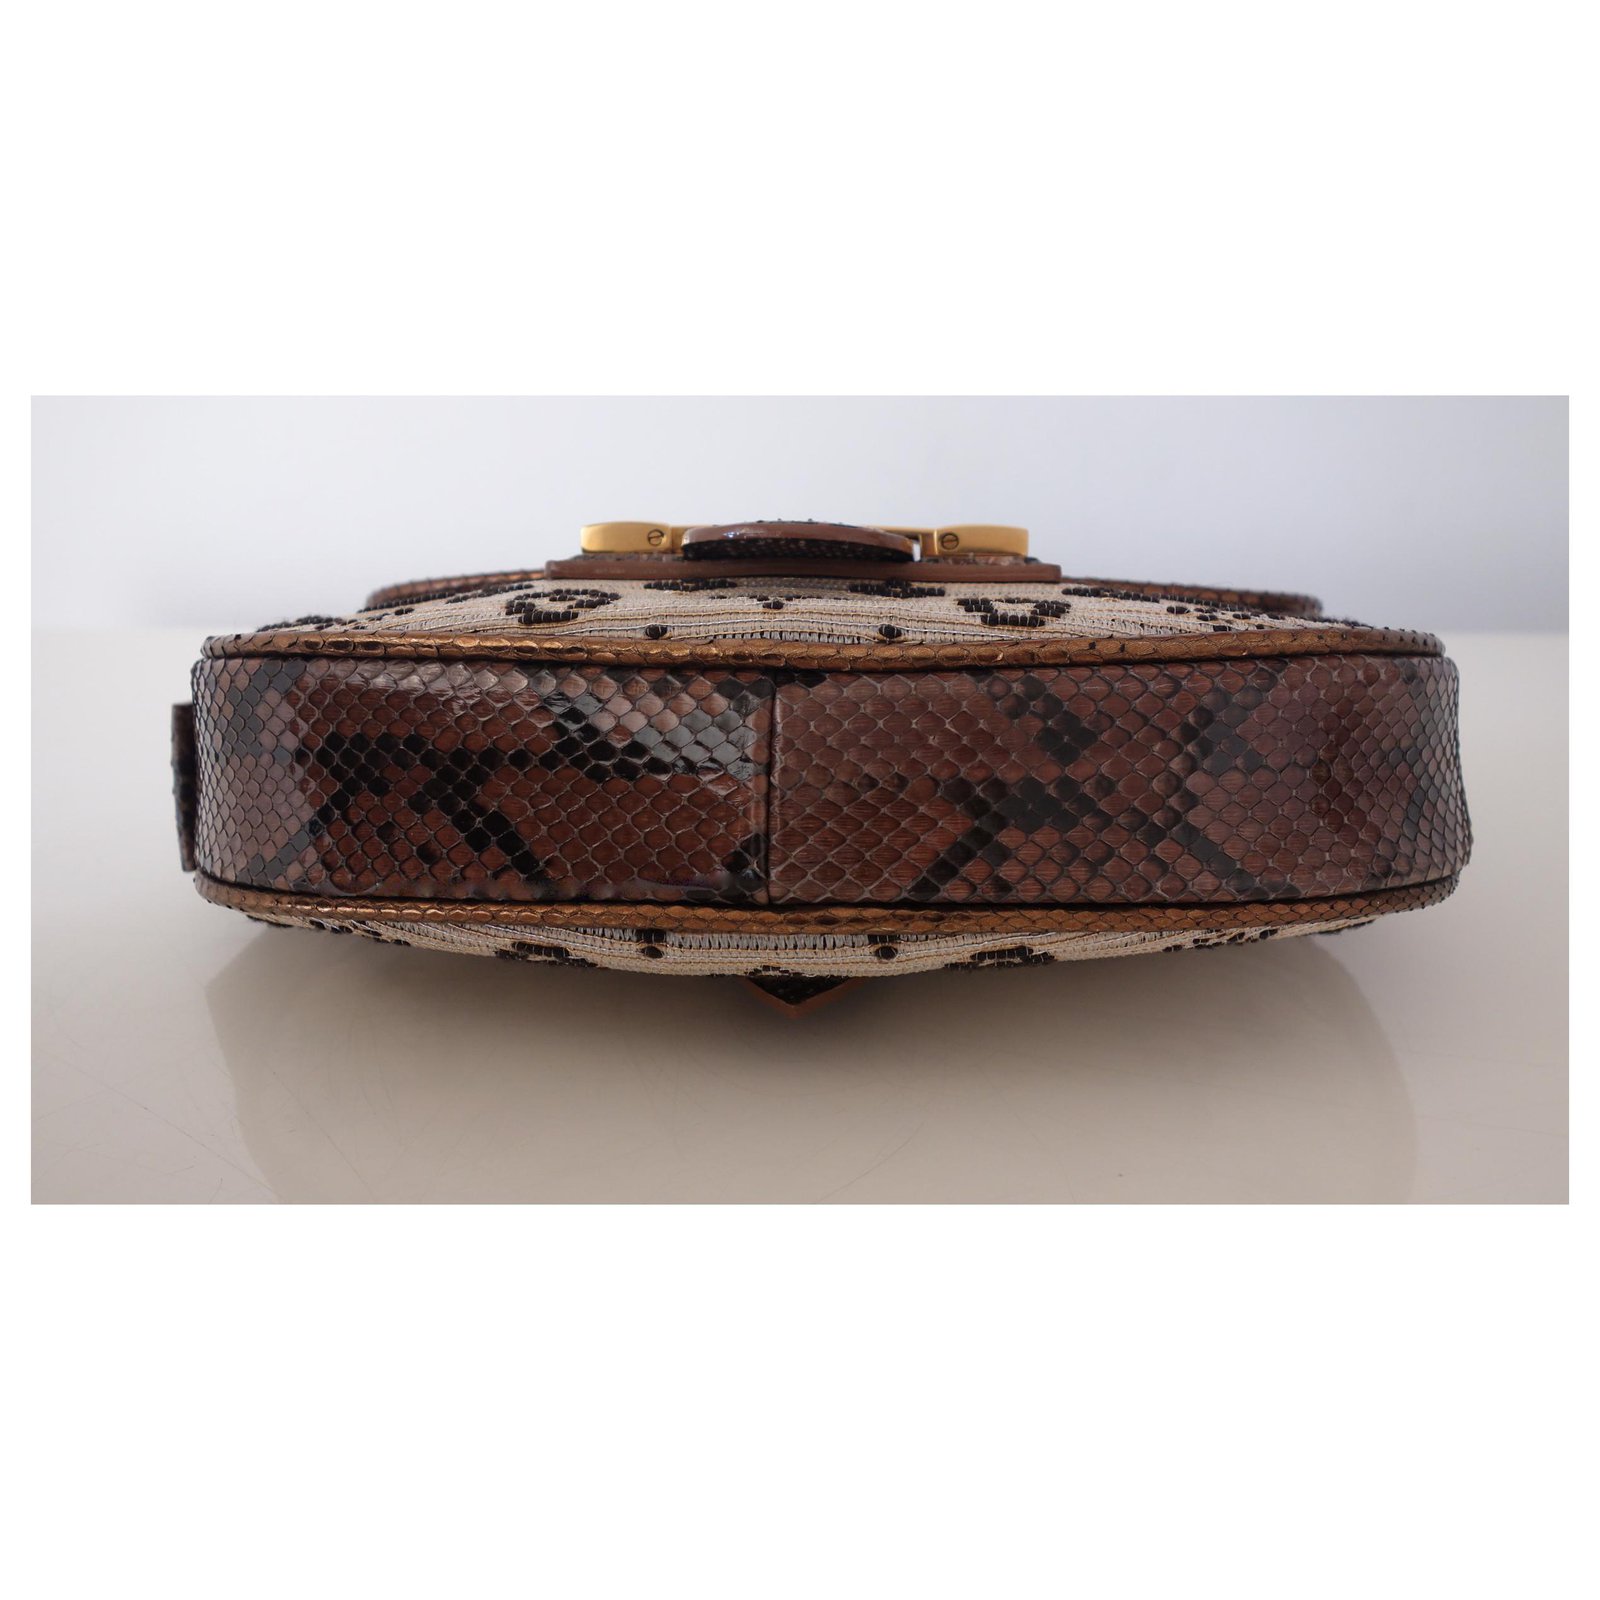 Lot - #LOUIS VUITTON Empire Levant handbag in monogram canvas, suede and  python trim - Spring/Summer 2011 Limited EditionHardware in gilt